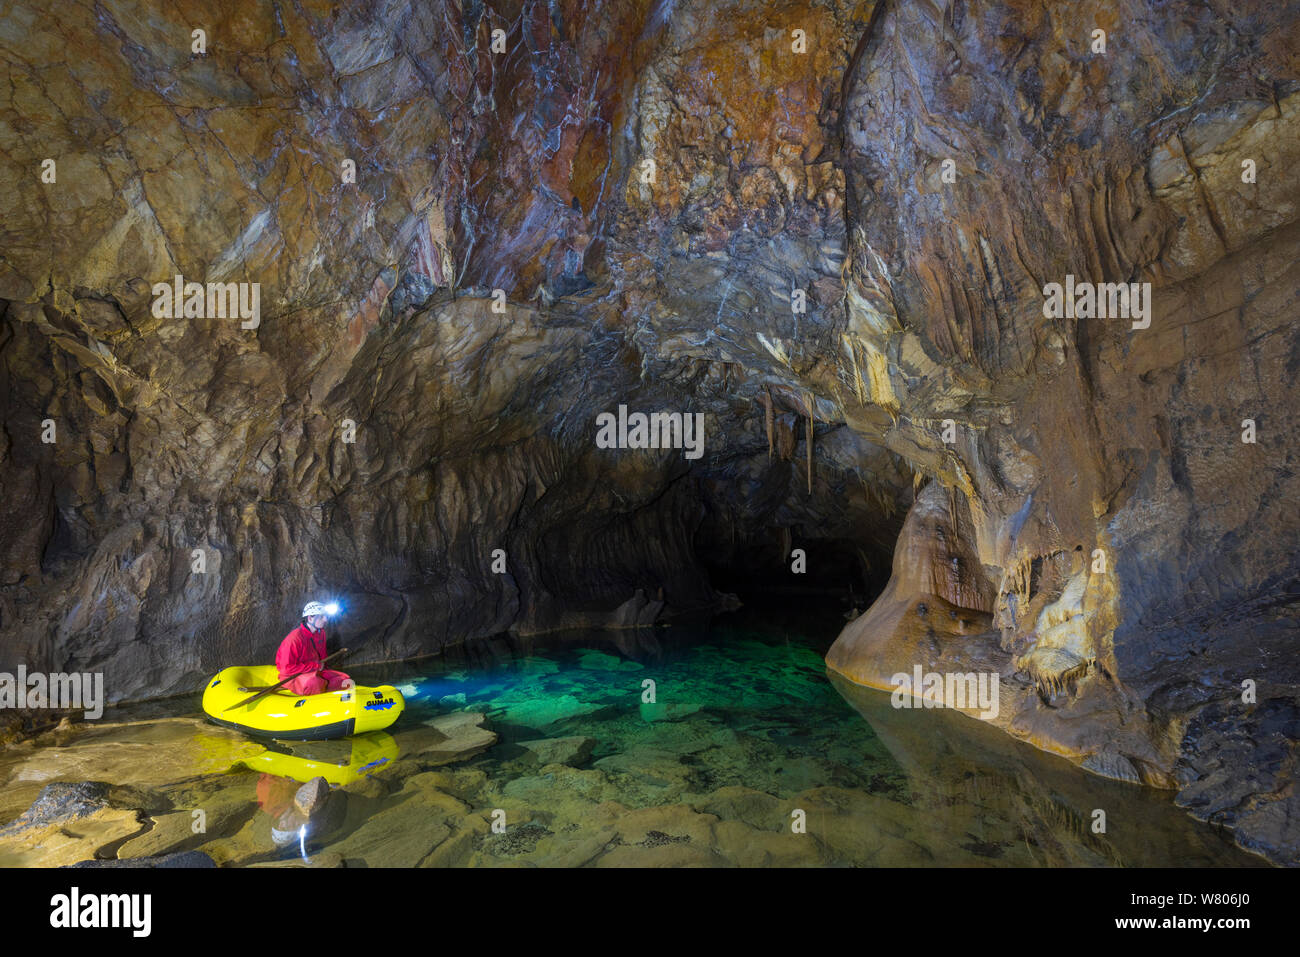 Man exploring underground lakes via rigid inflatable boat, Cross Cave (Krizna jama) under Cross Mountain, Green Karst, Slovenia, October 2014. Stock Photo